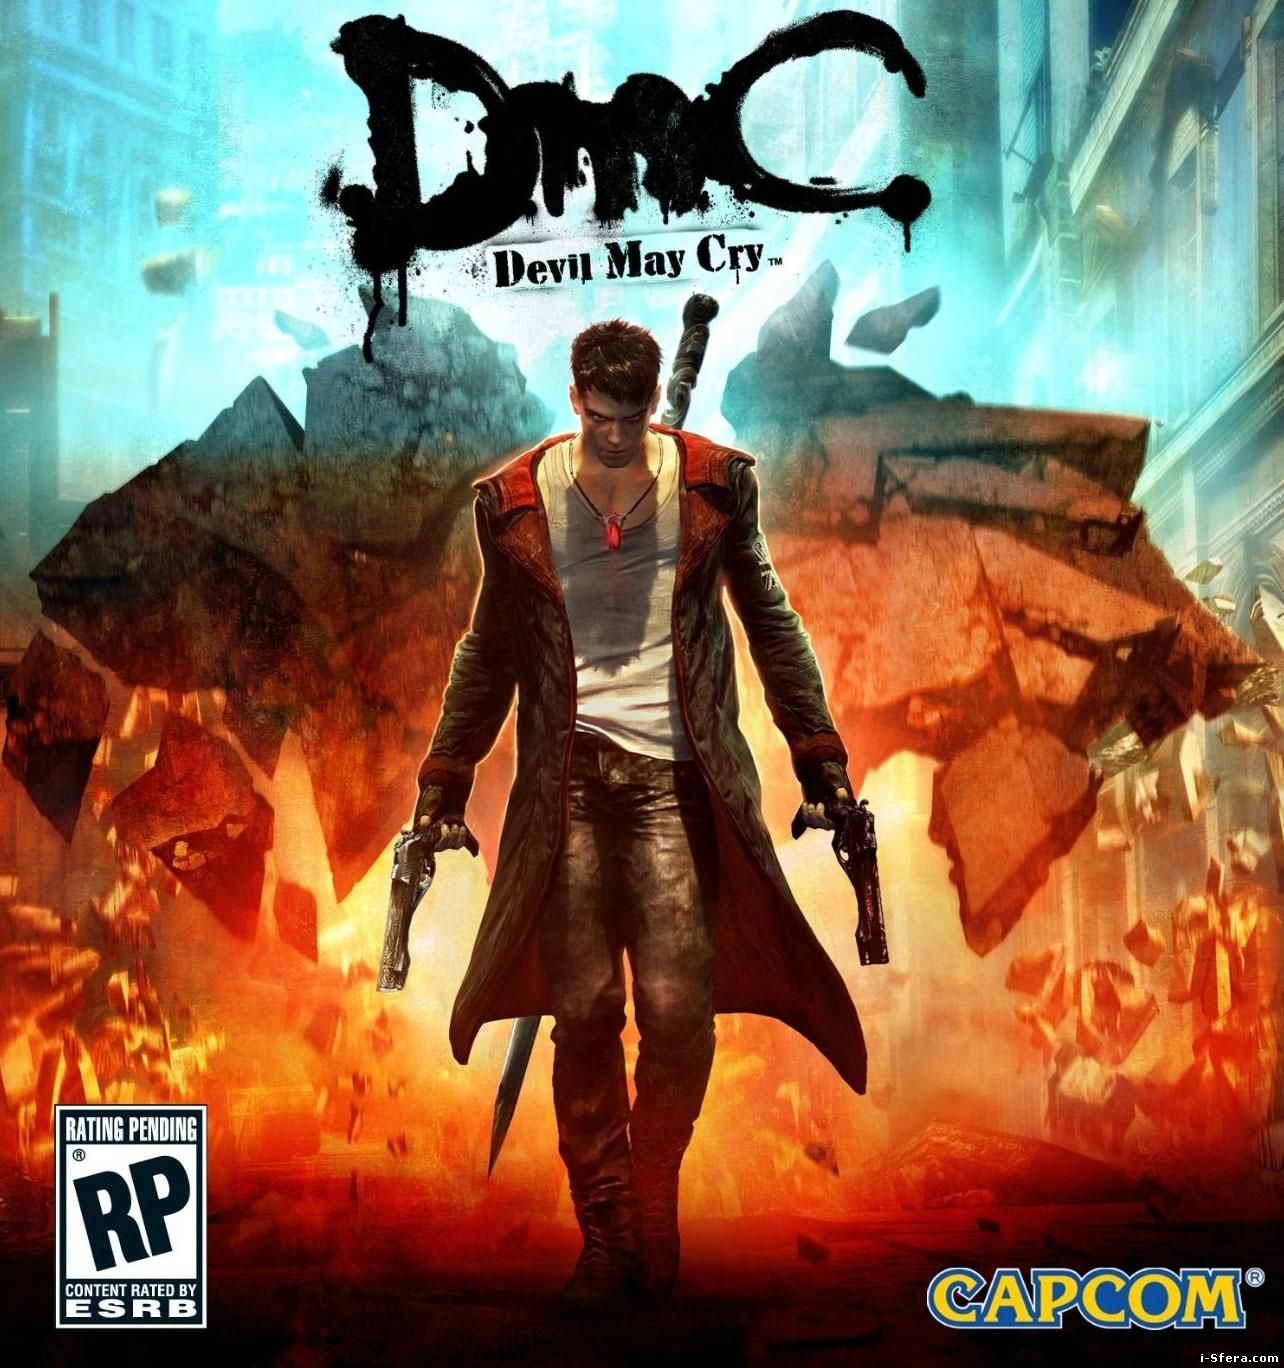 DmC: Devil May Cry 5